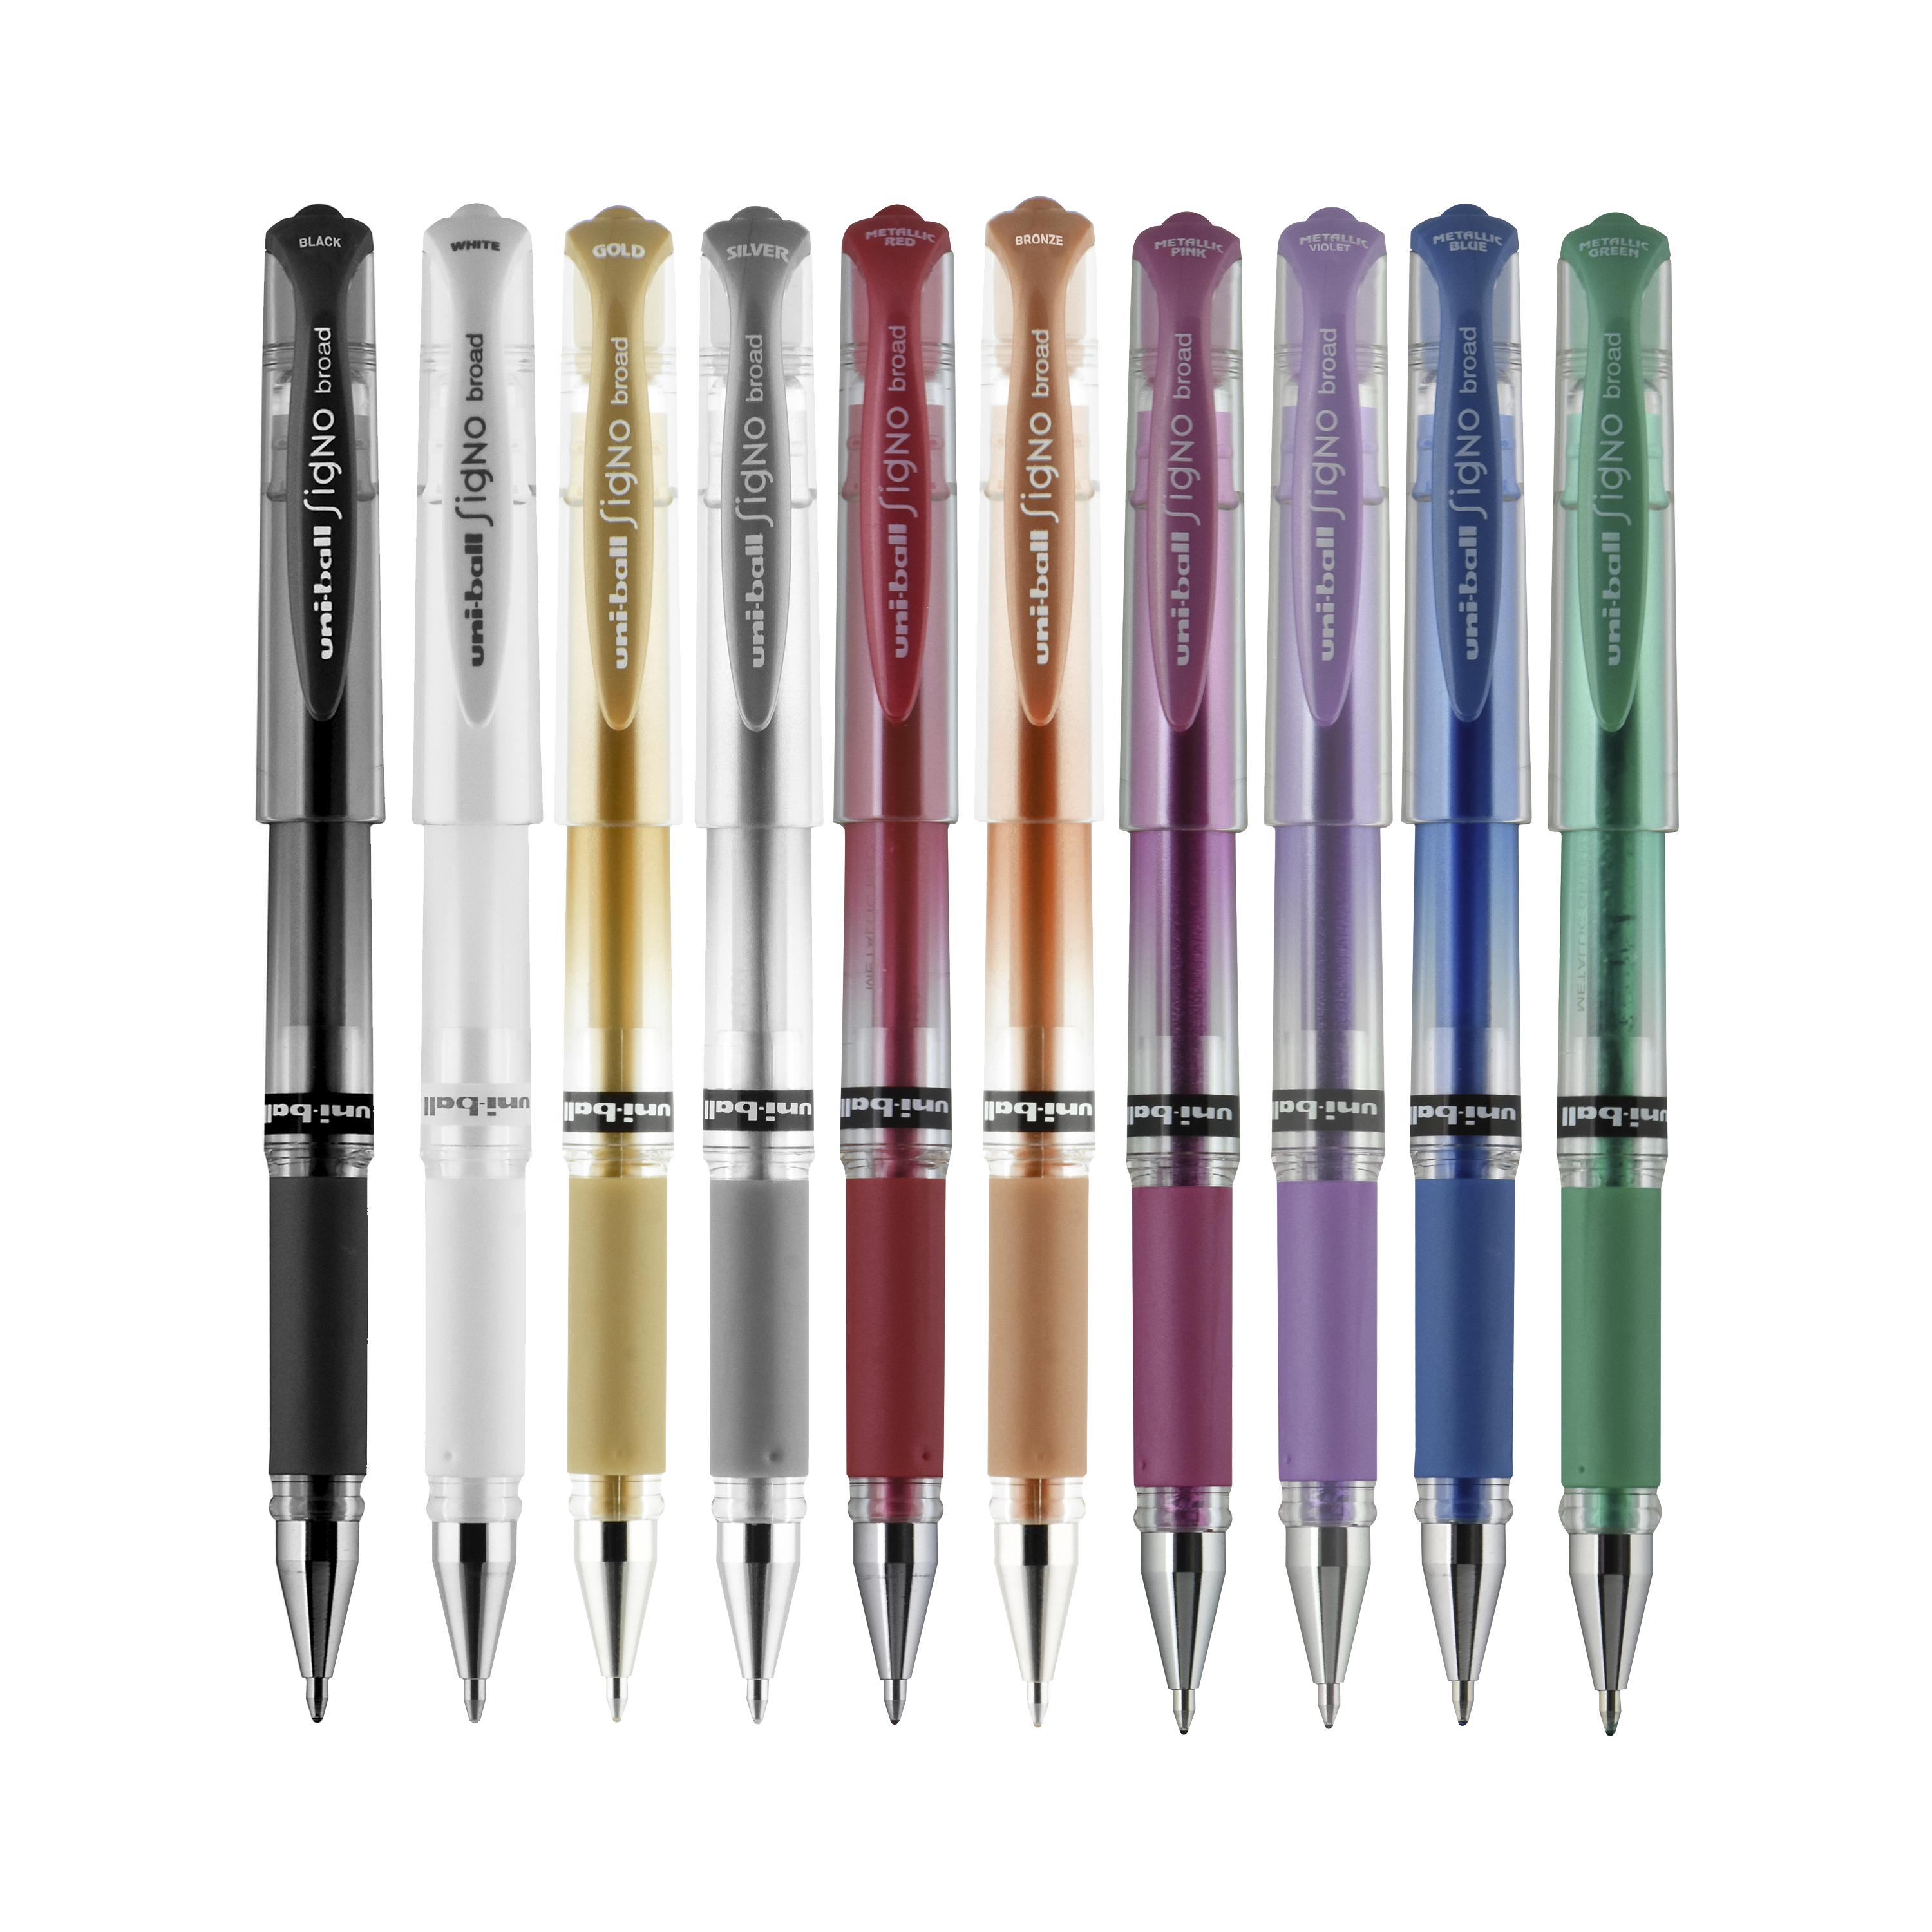 uniball™ Signo Gel Impact, Gel Pens (10 Color Set)